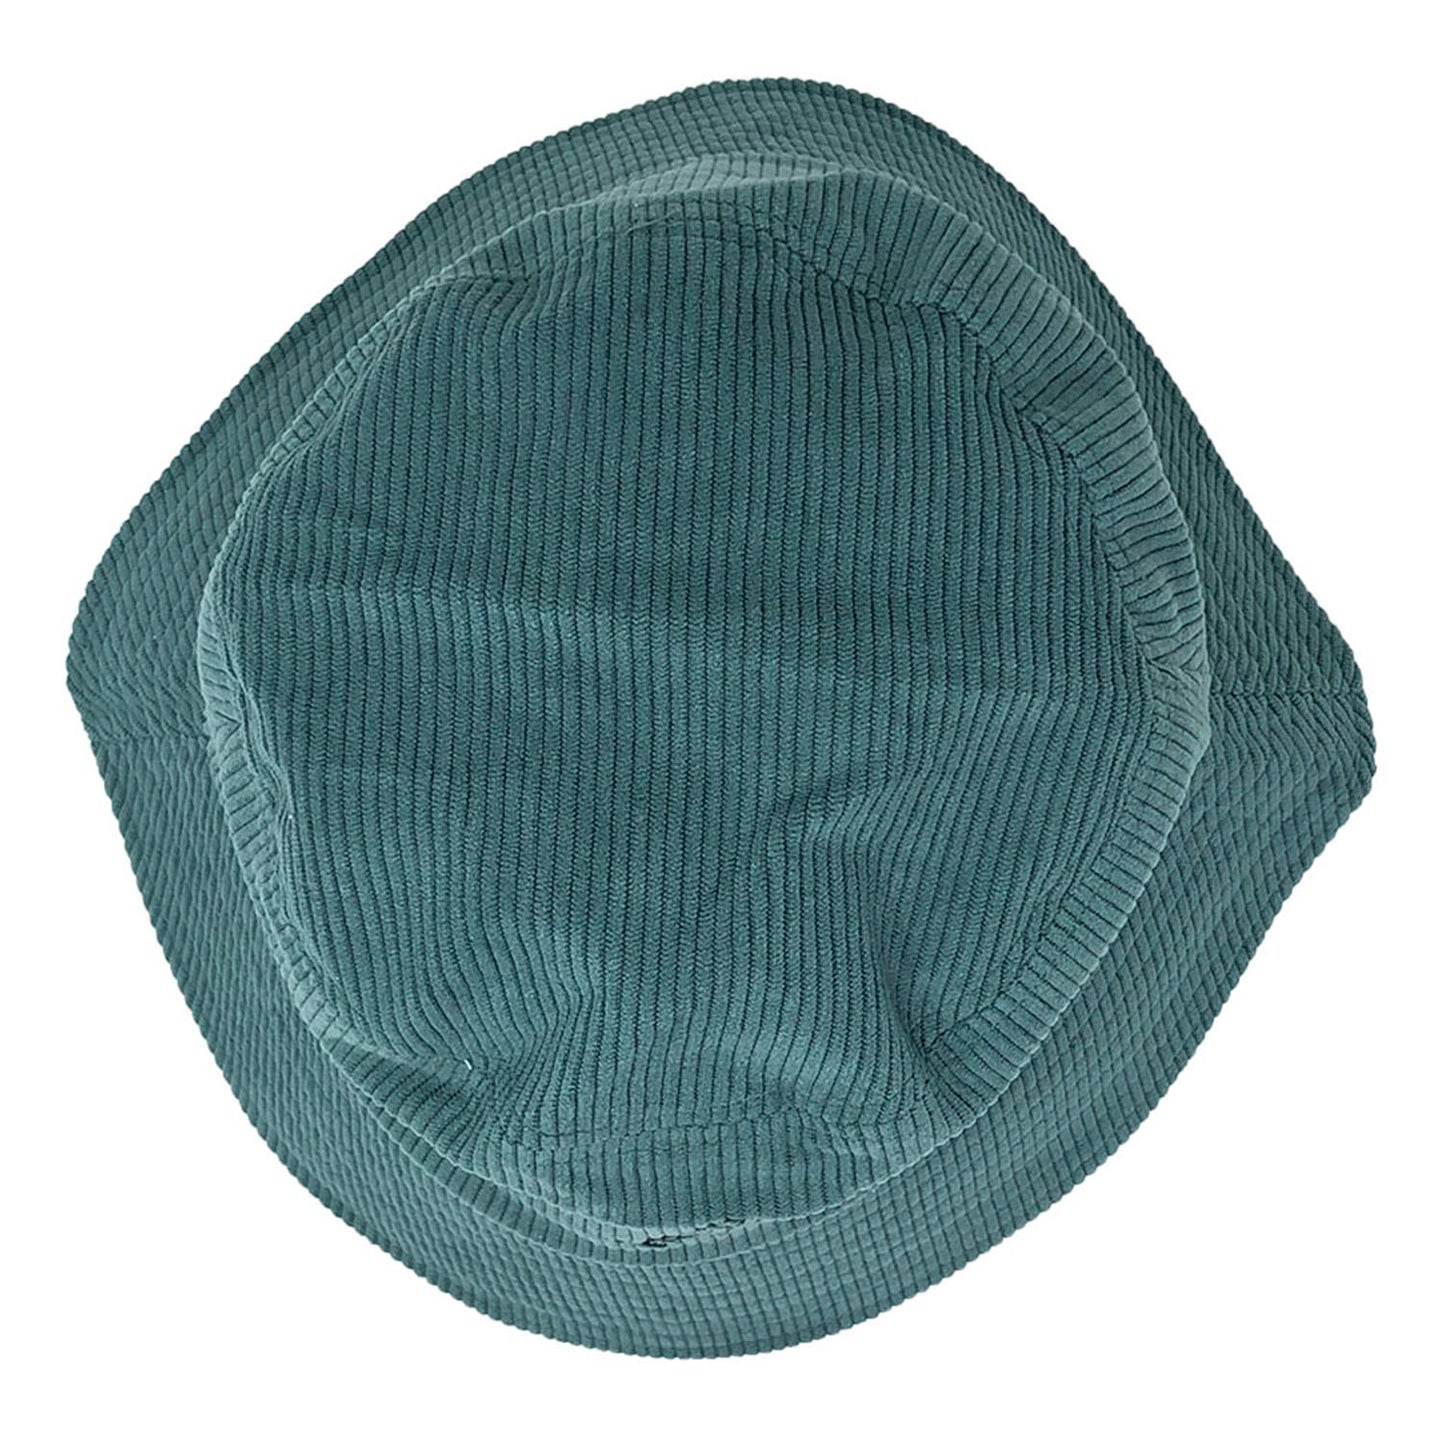 Gorro Pescador Trend Bucket Hat BSK Verde Oscuro  Sarosa